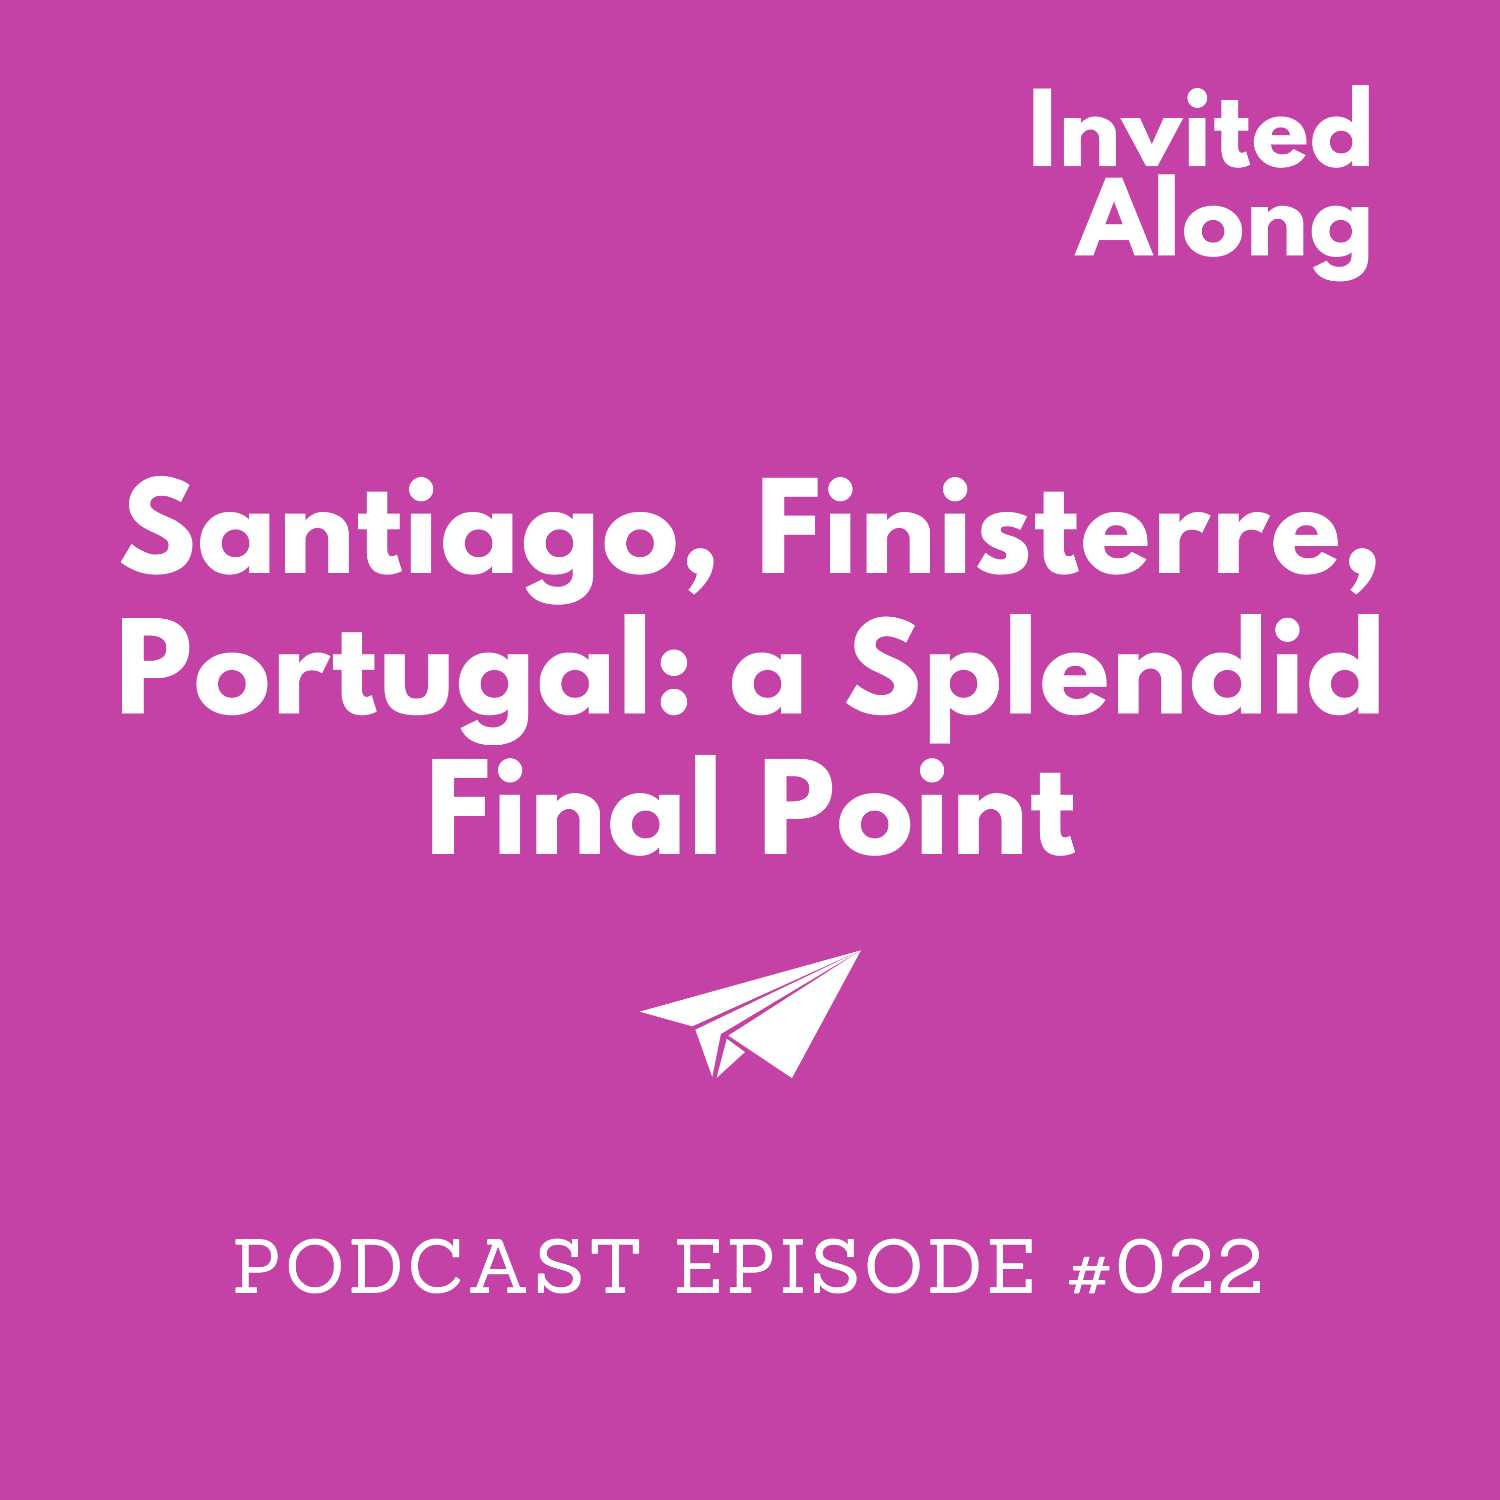 Episode 022 | Santiago, Finisterre, Portugal: a Splendid Final Point